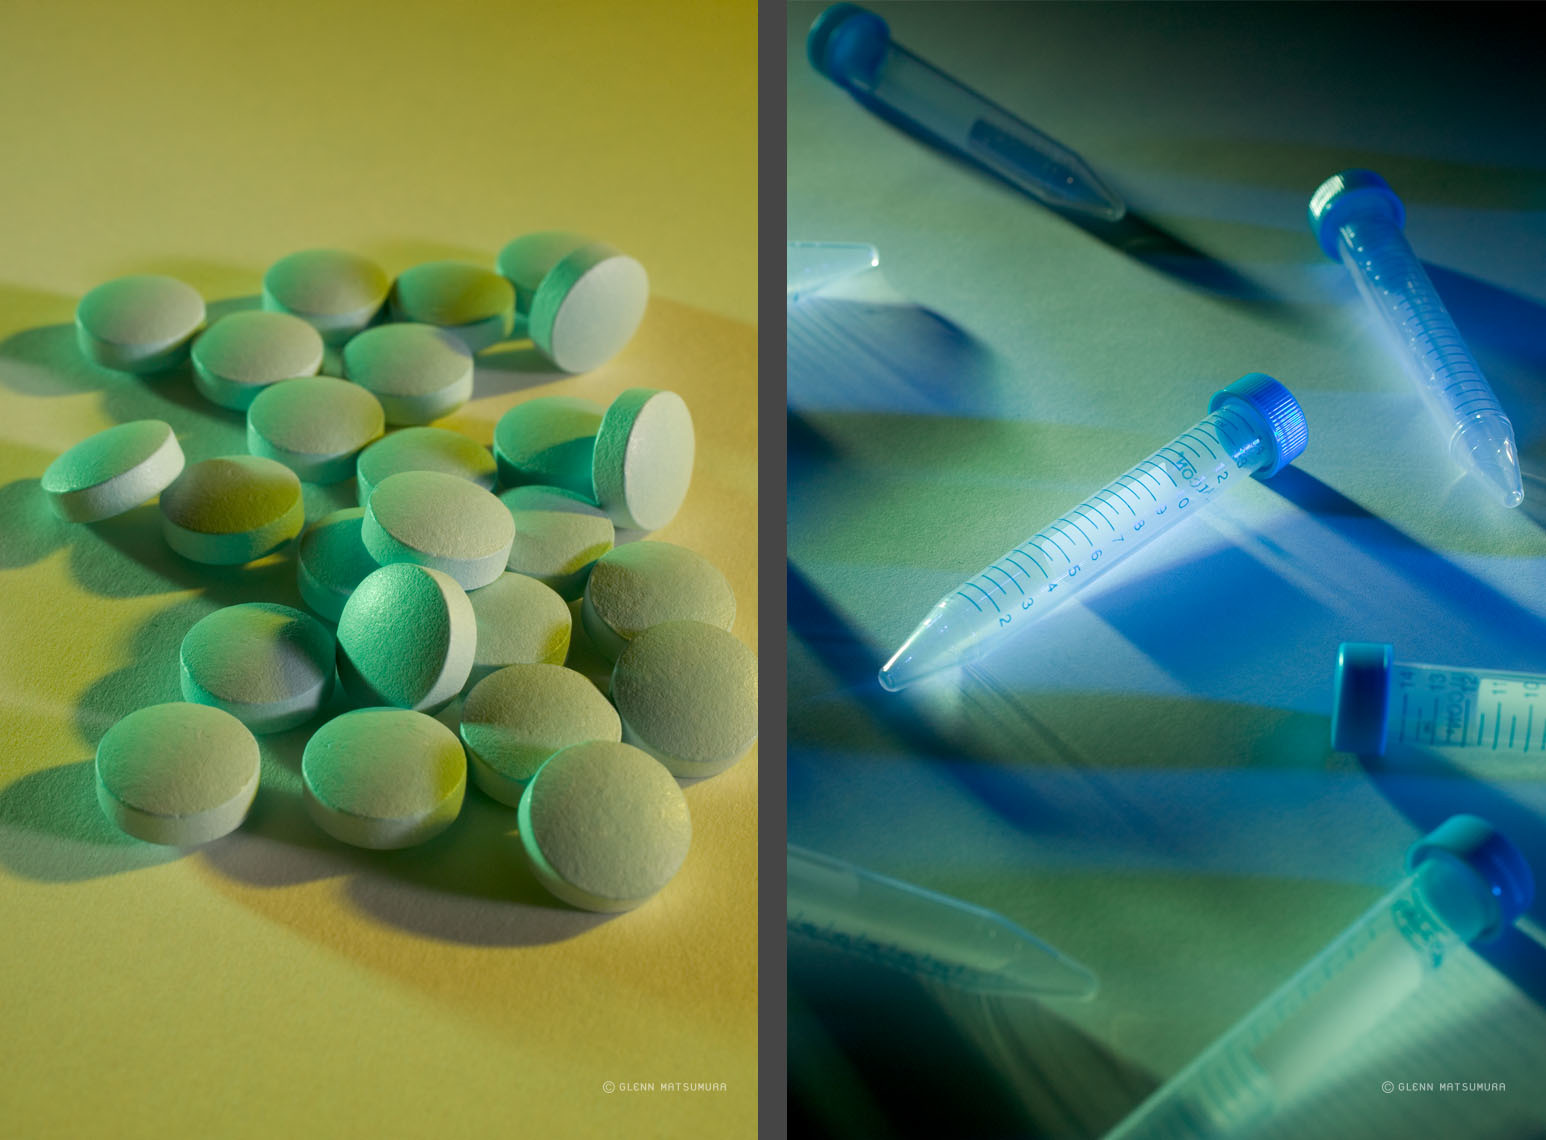 Glenn_Matsumura_Thermo pills test tubes vials 2 up APF